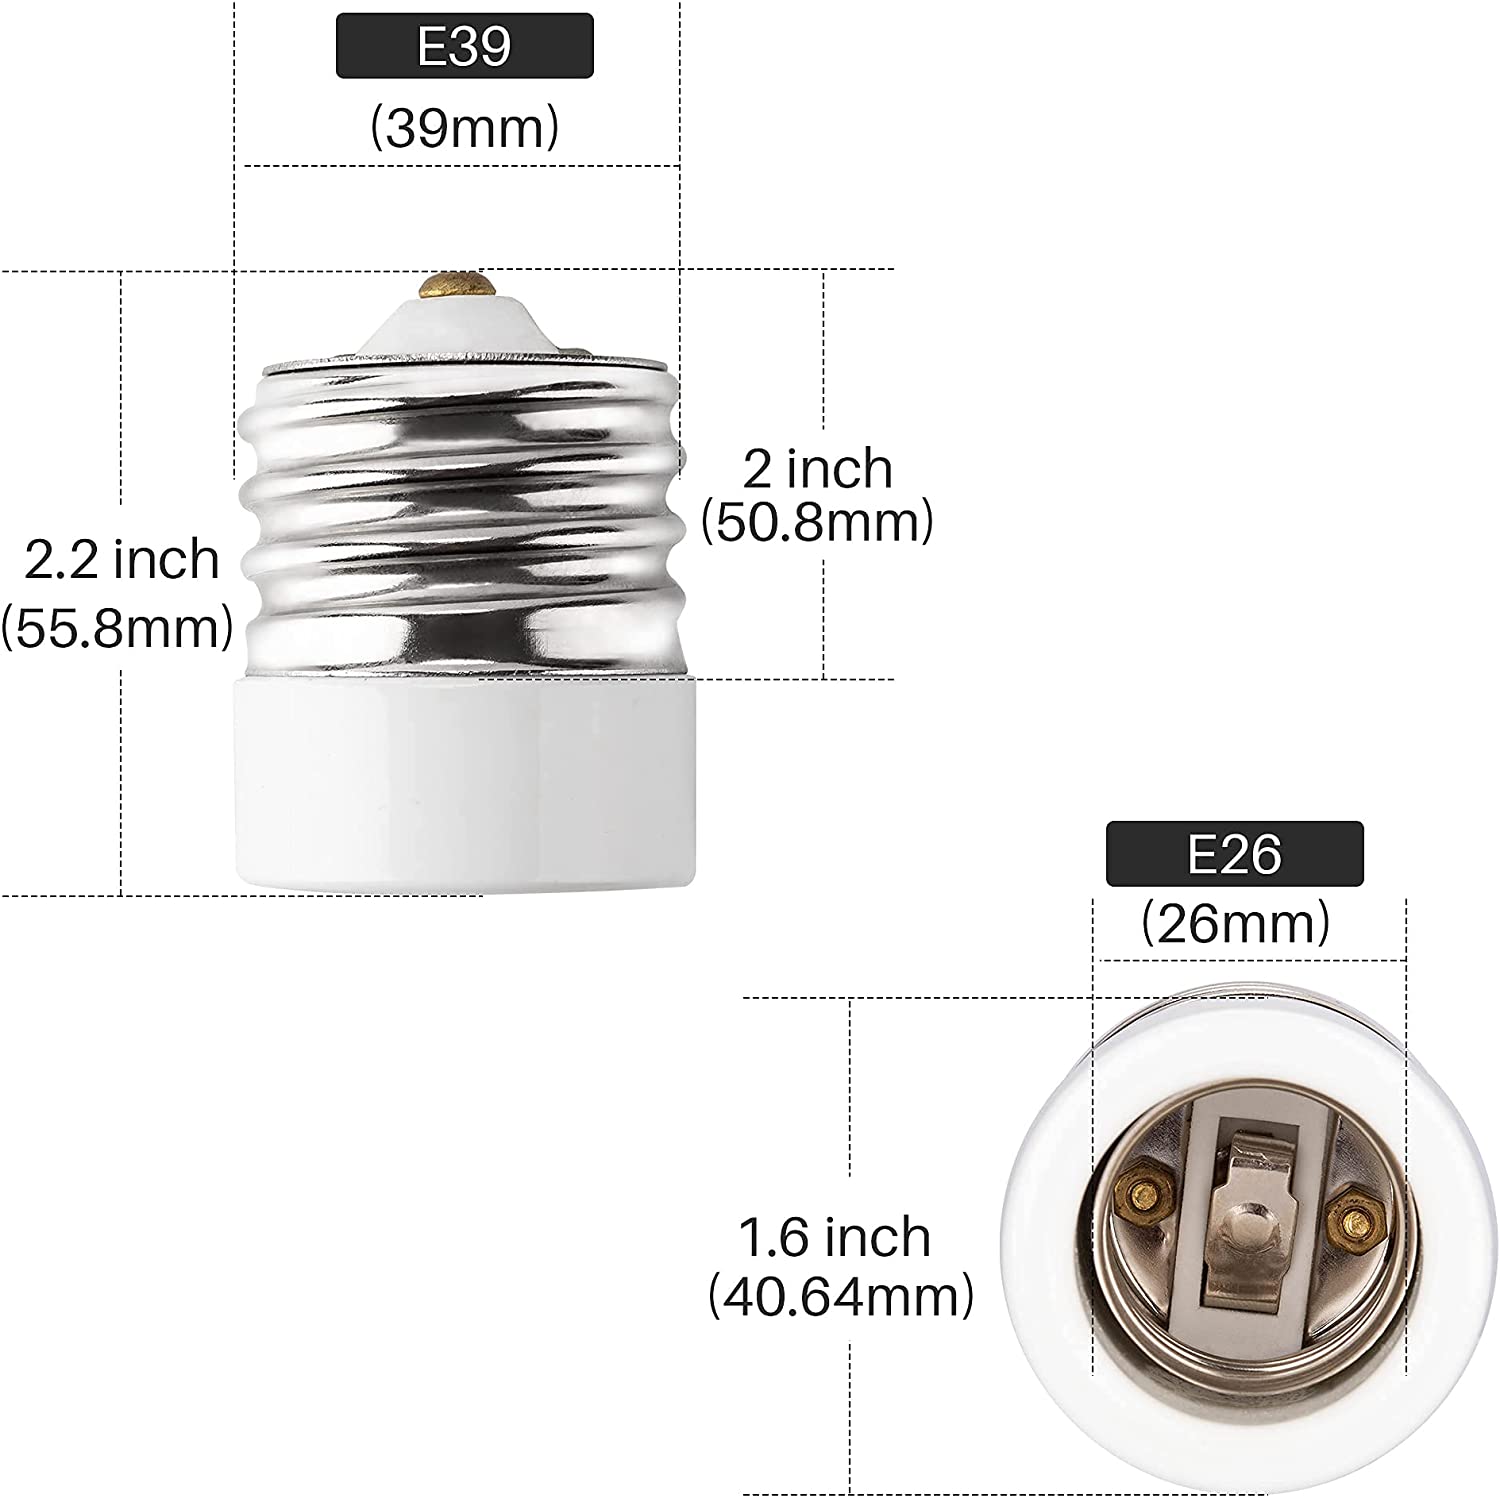 UL-listed E39 to E26 Adapter 250V 660W Light Bulb Adapter